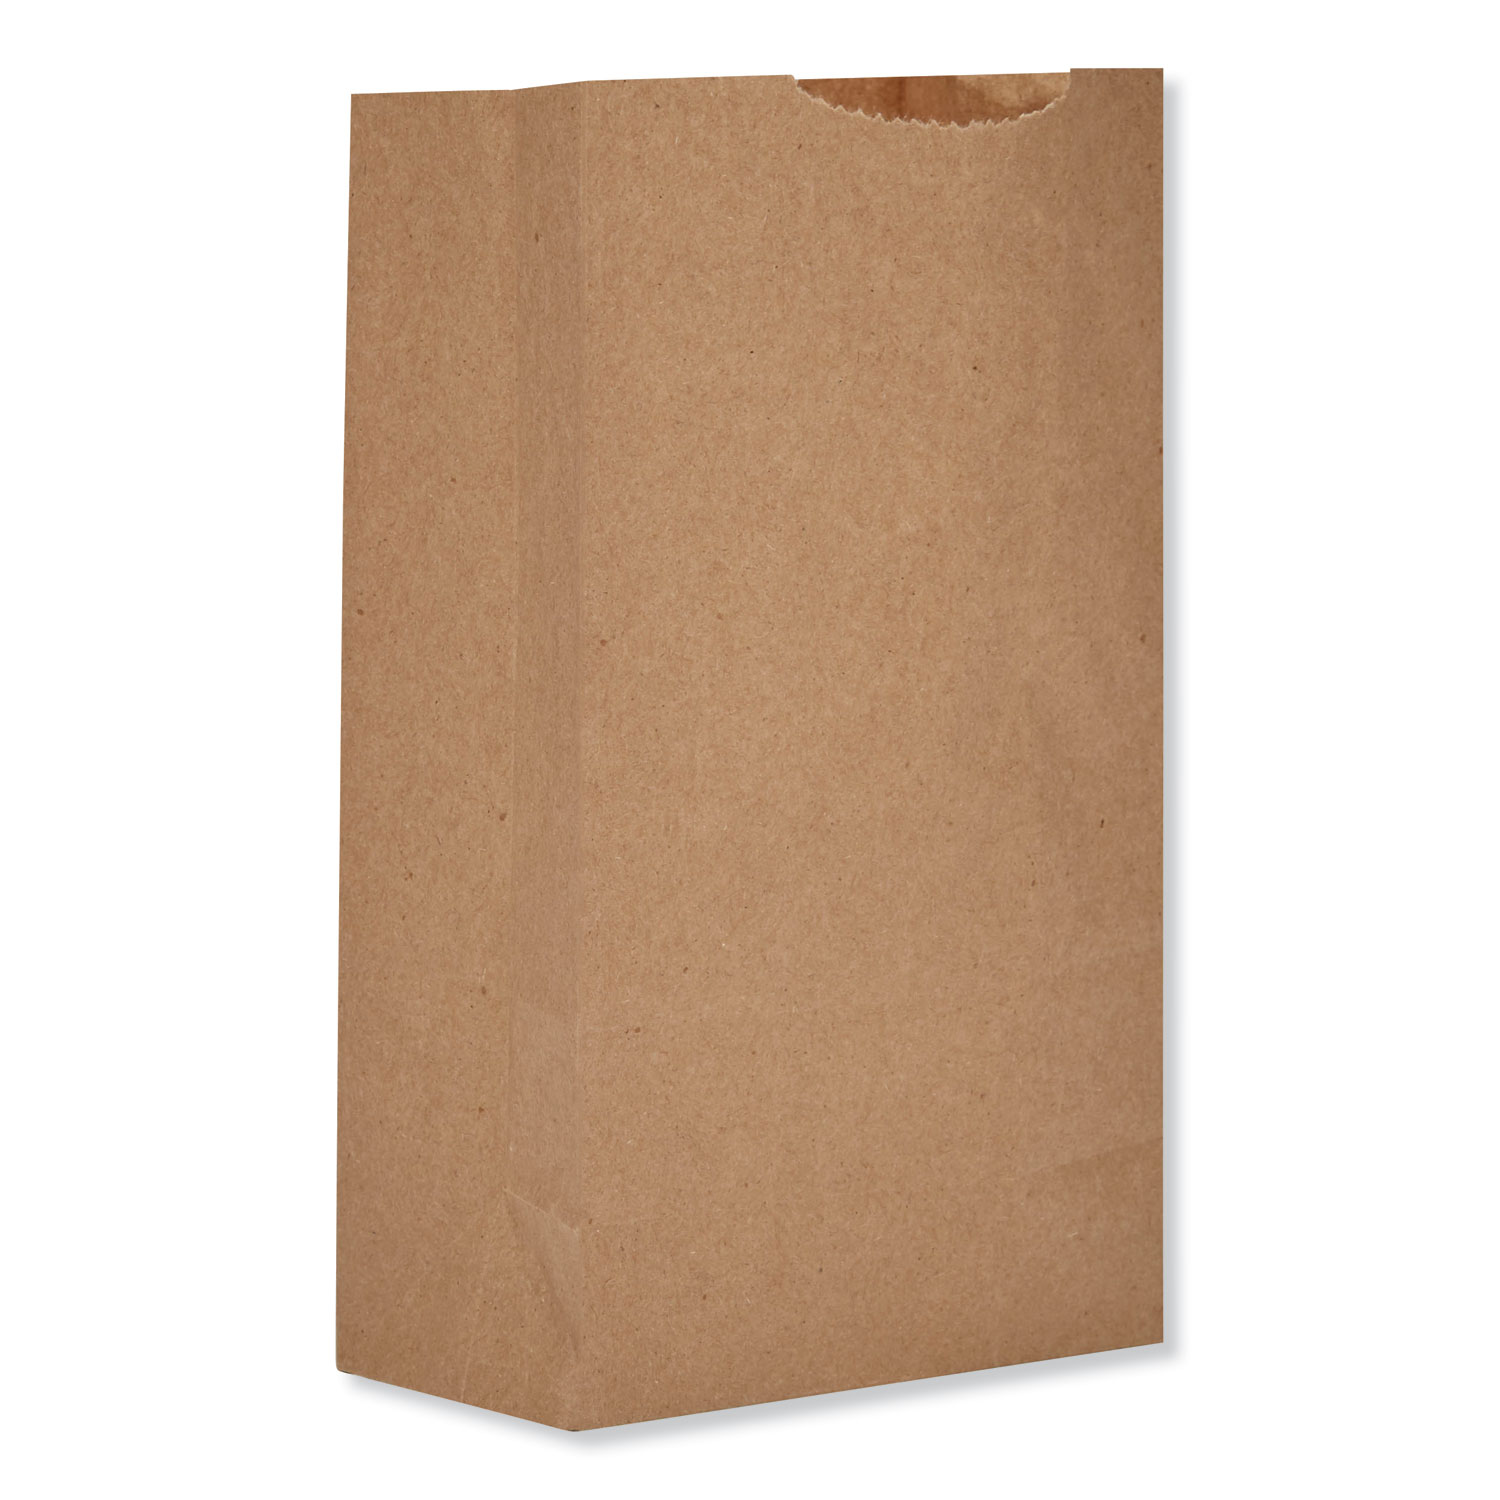  General 30902 Grocery Paper Bags, 52 lbs Capacity, #2, 8.13w x 4.25d x 9.75h, Kraft, 500 Bags (BAGGX2500) 